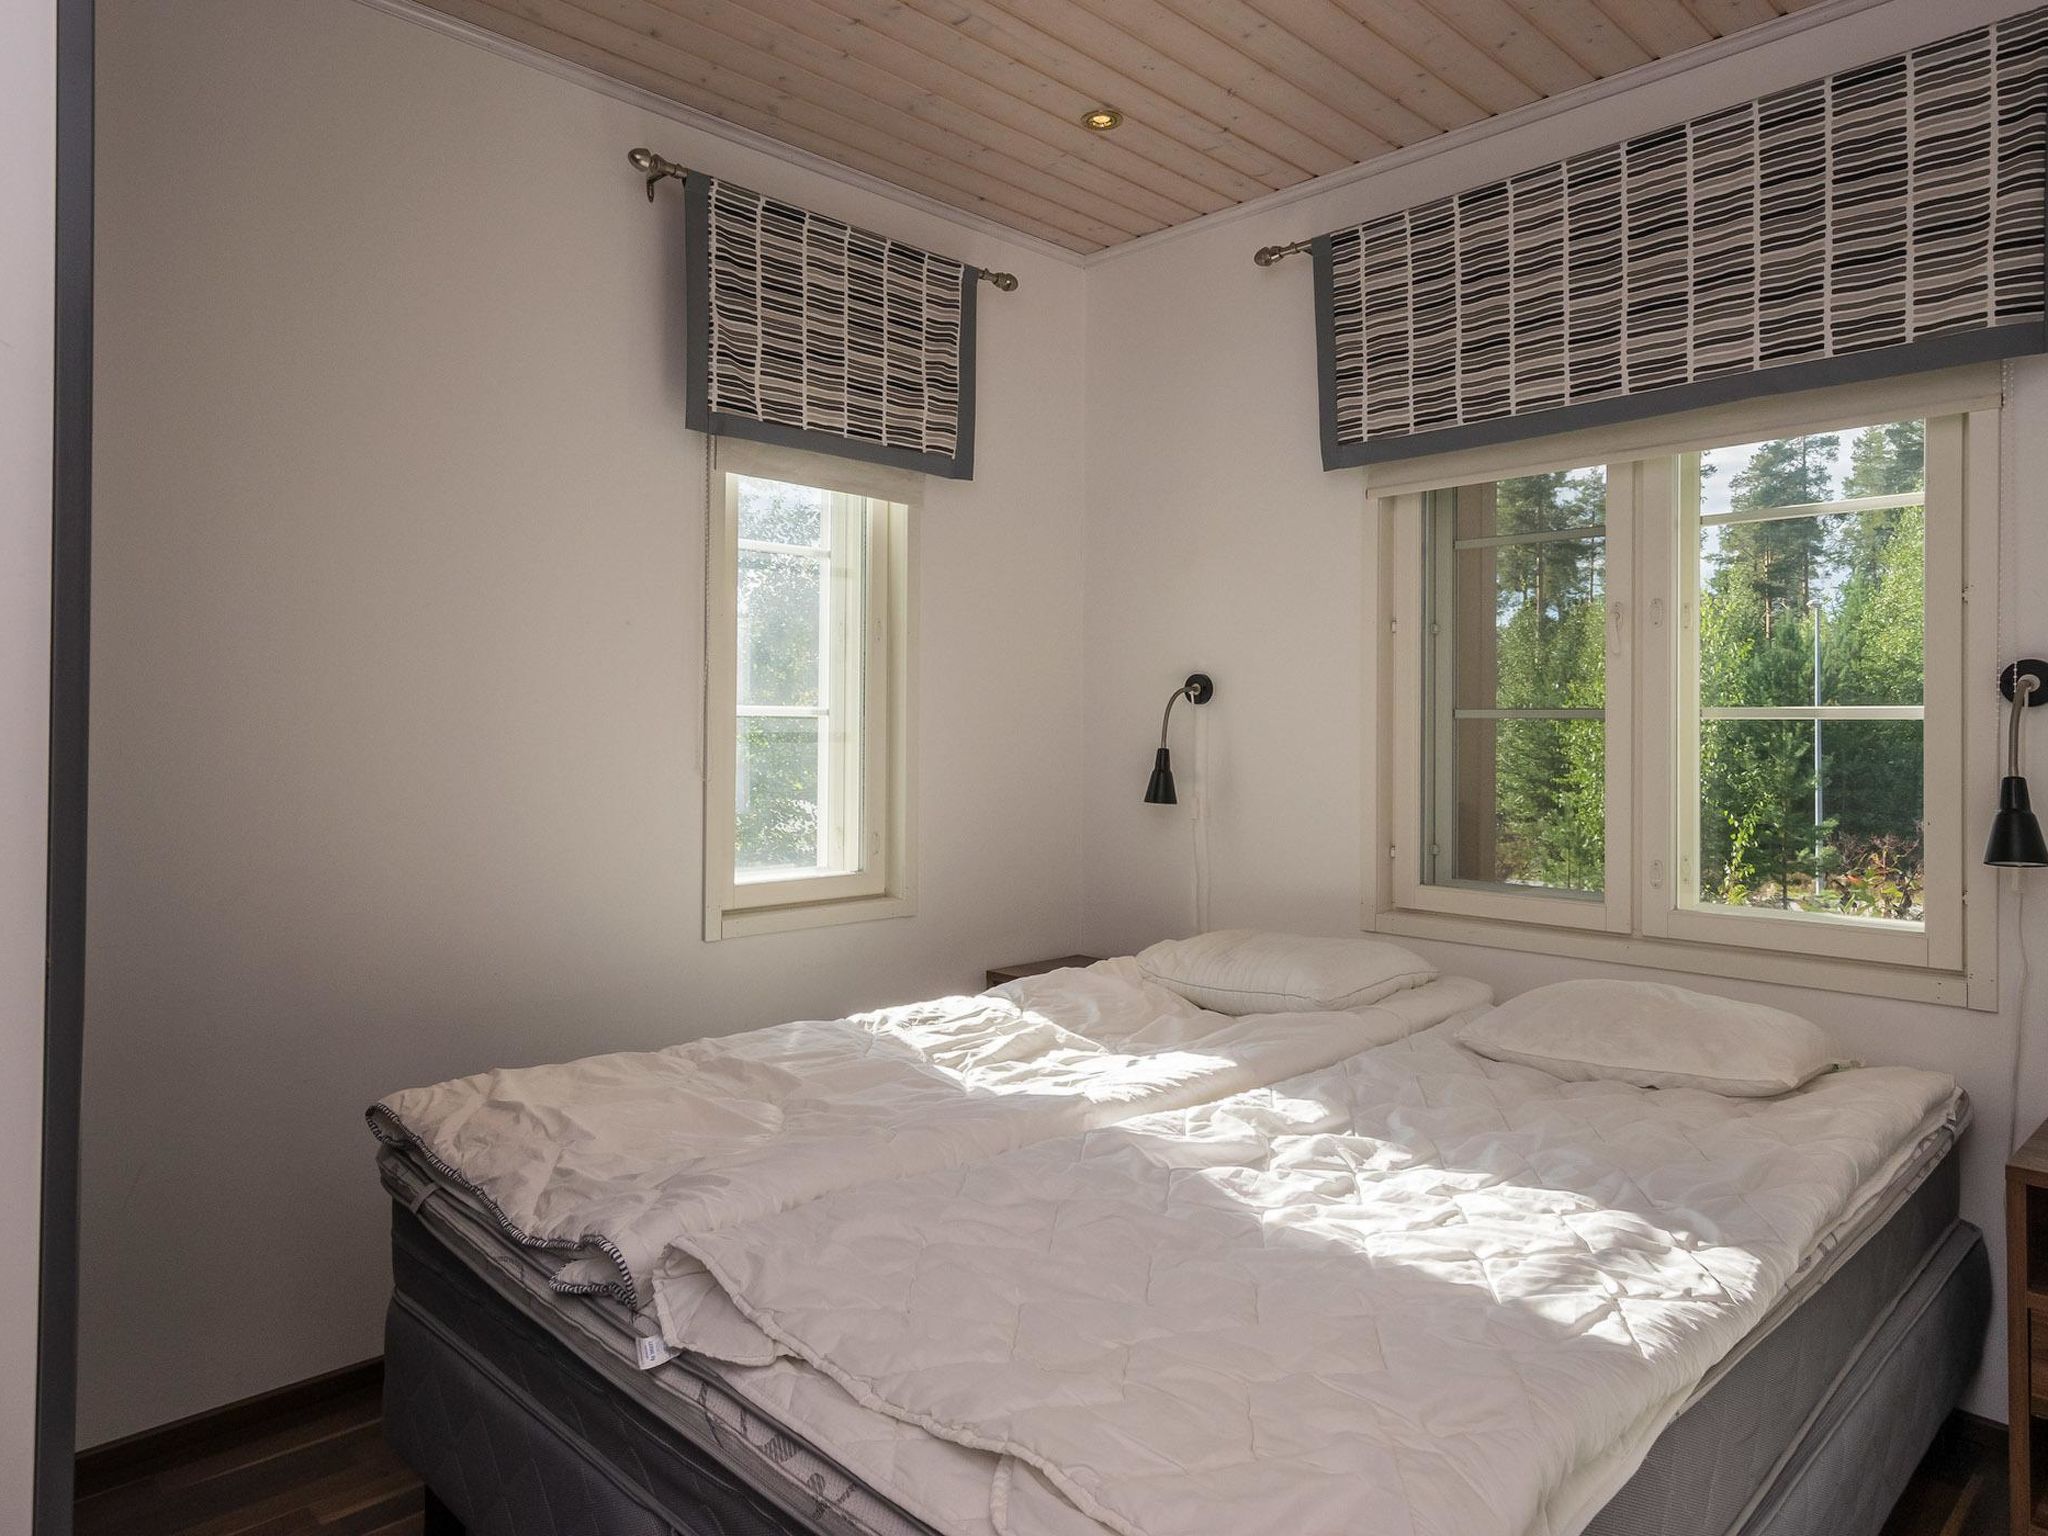 Photo 10 - 4 bedroom House in Sotkamo with sauna